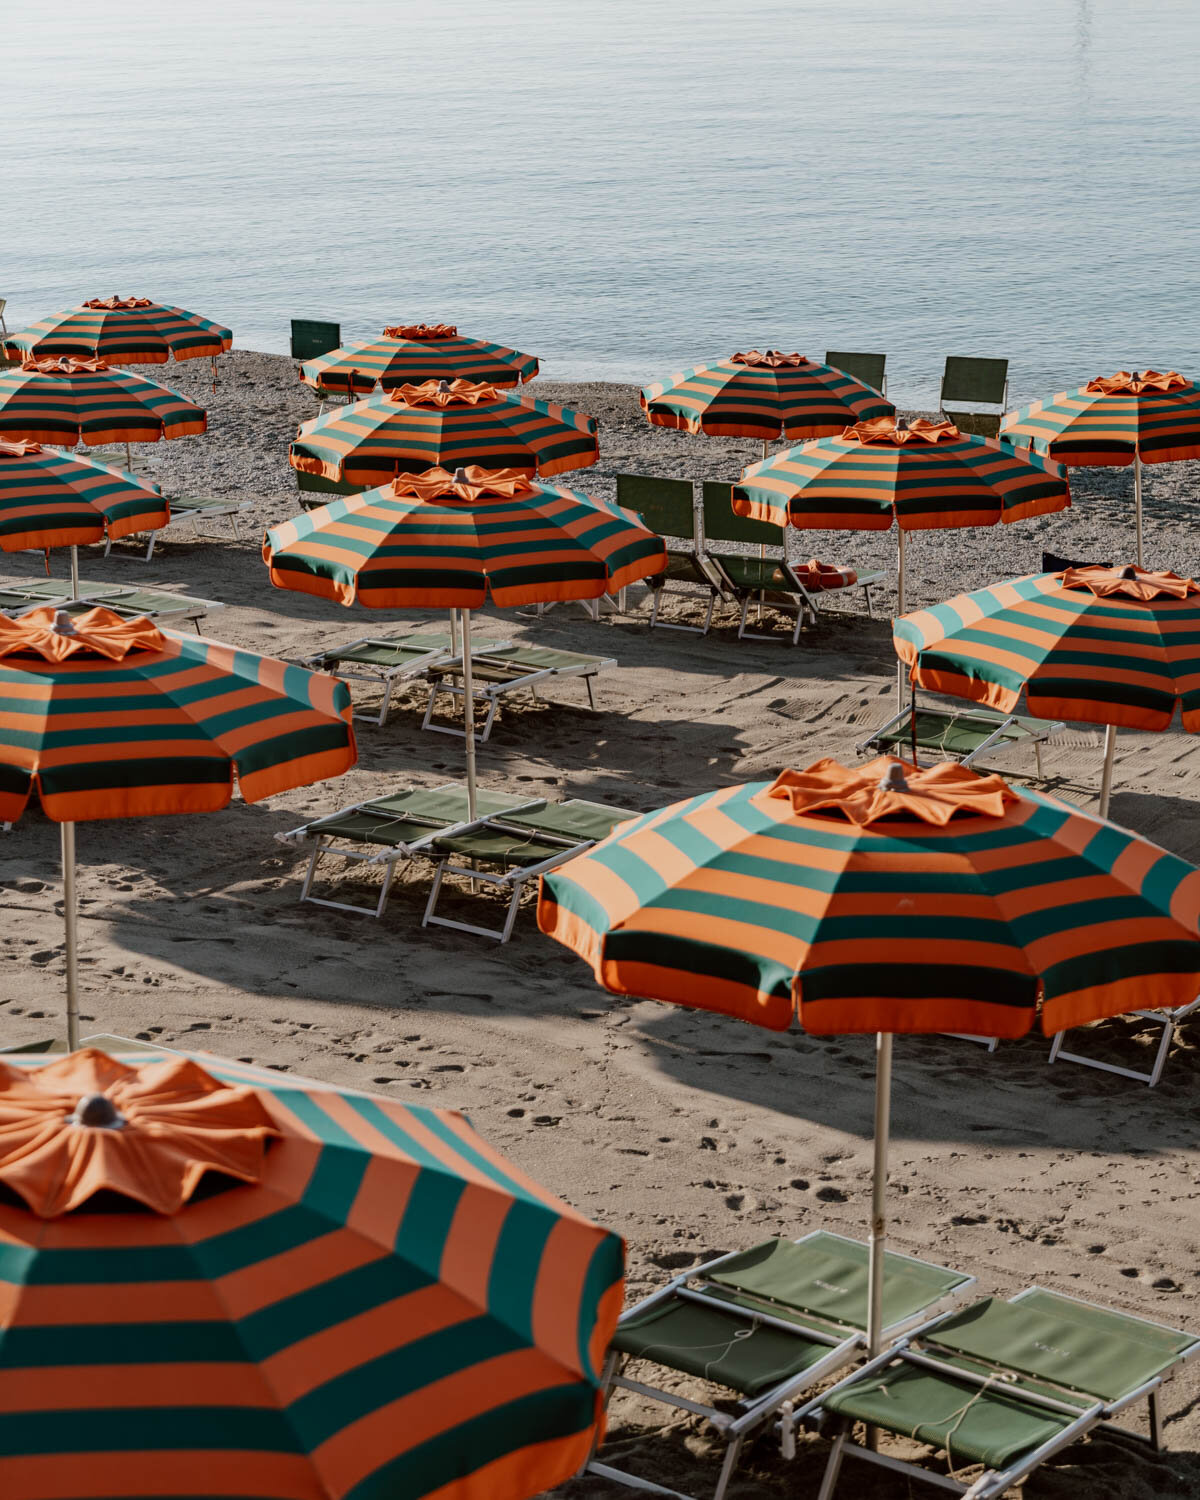 Orange and Green Parasols - Monterosso - Cinque Terre